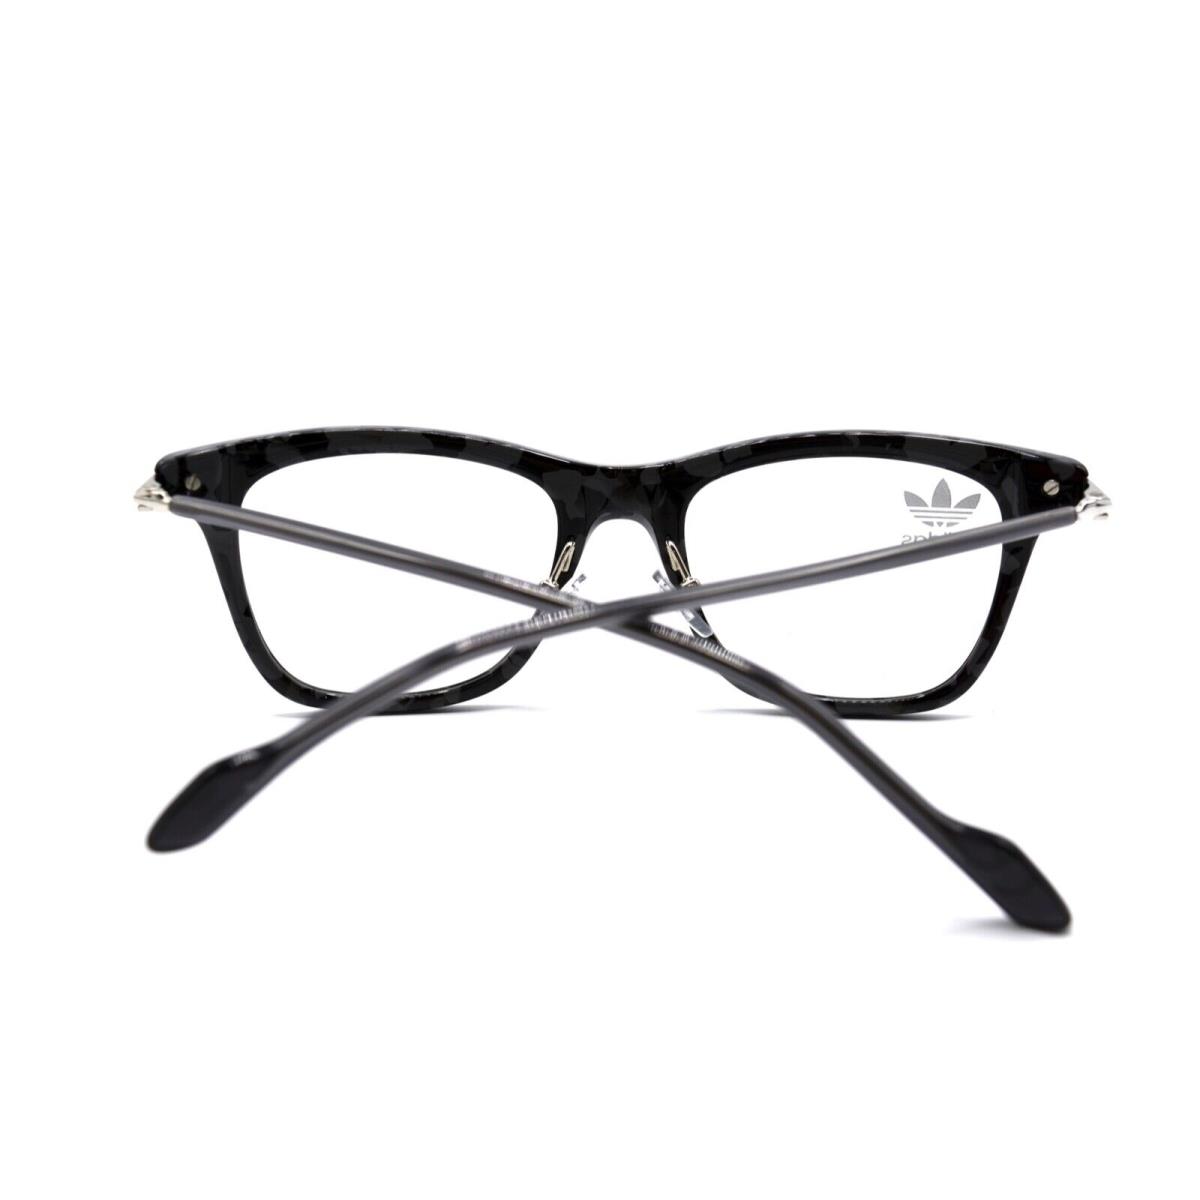 Adidas eyeglasses  - BLACK GREY SPOTTED Frame 2